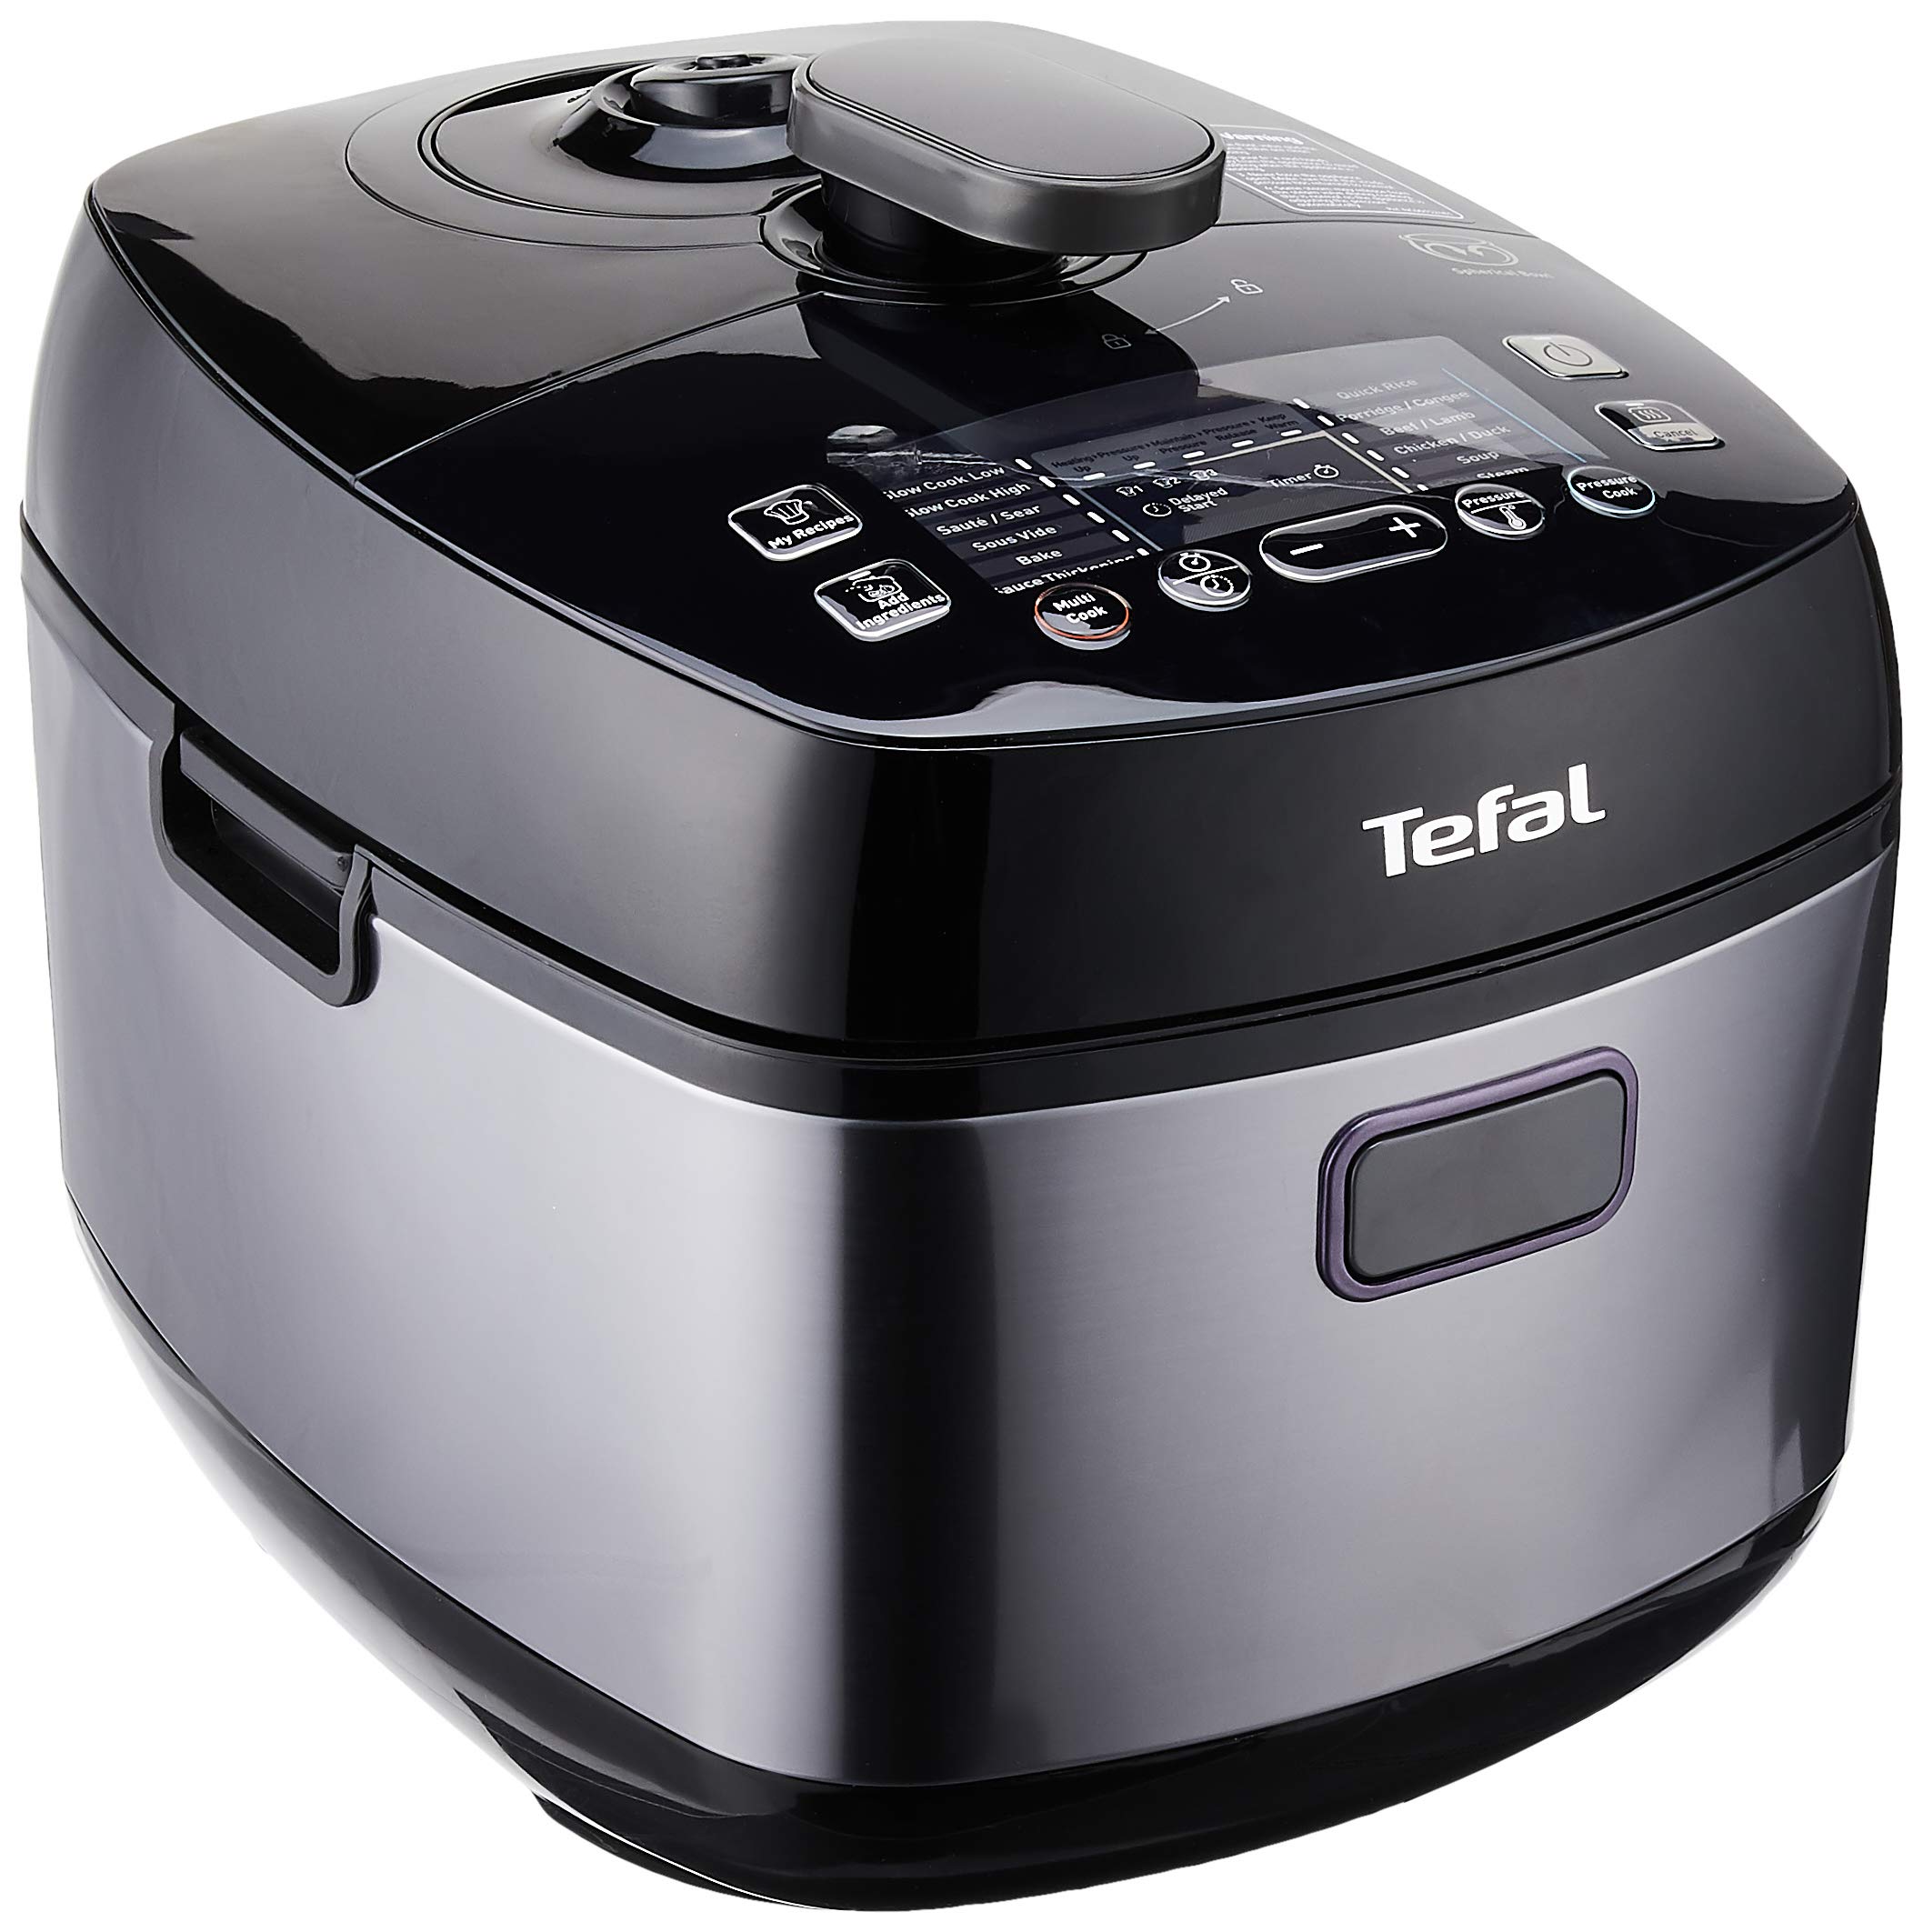 Tefal Home Chef Smart Pro Multicooker CY625, Black